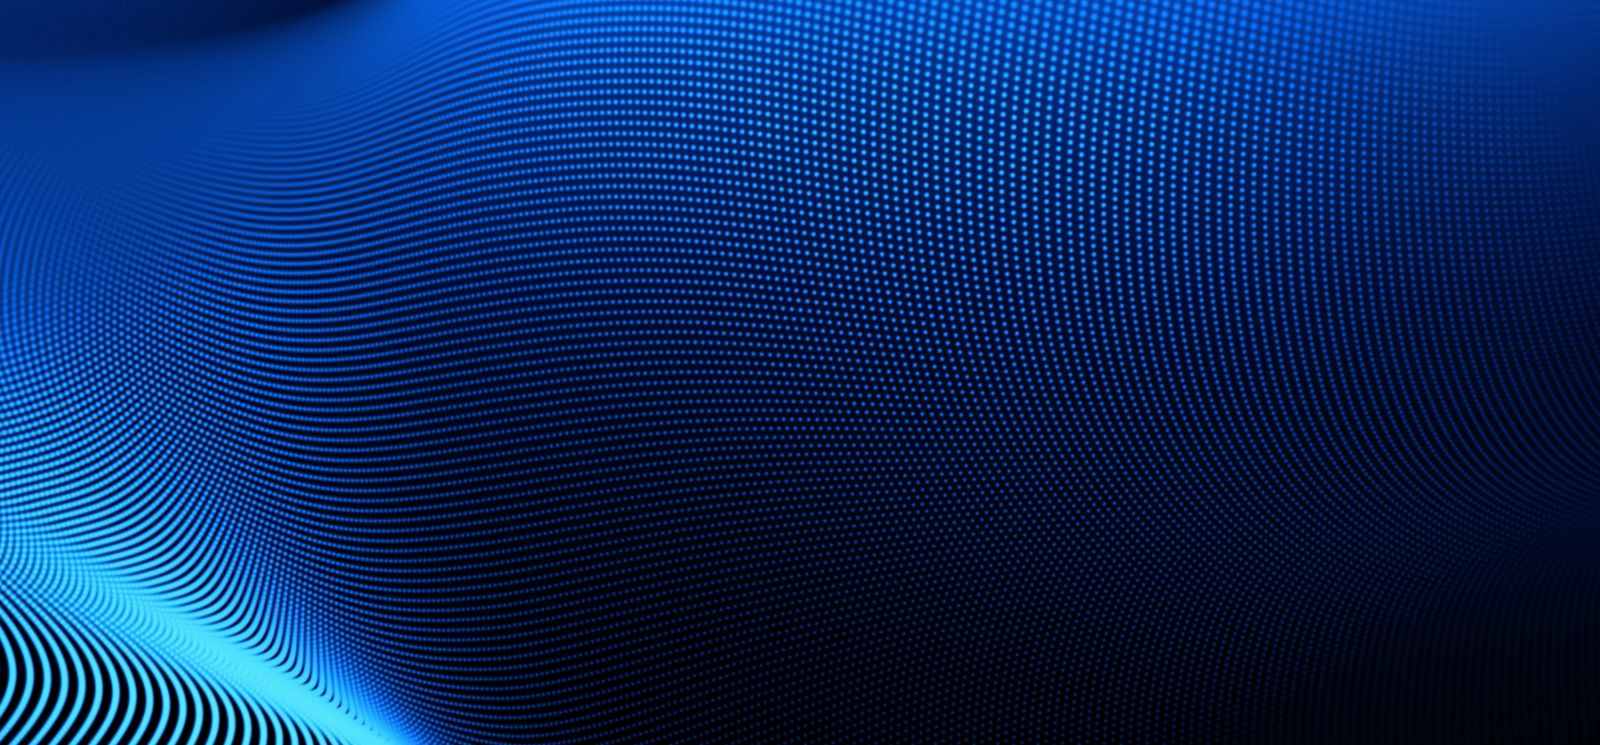 Blue digital mesh waves